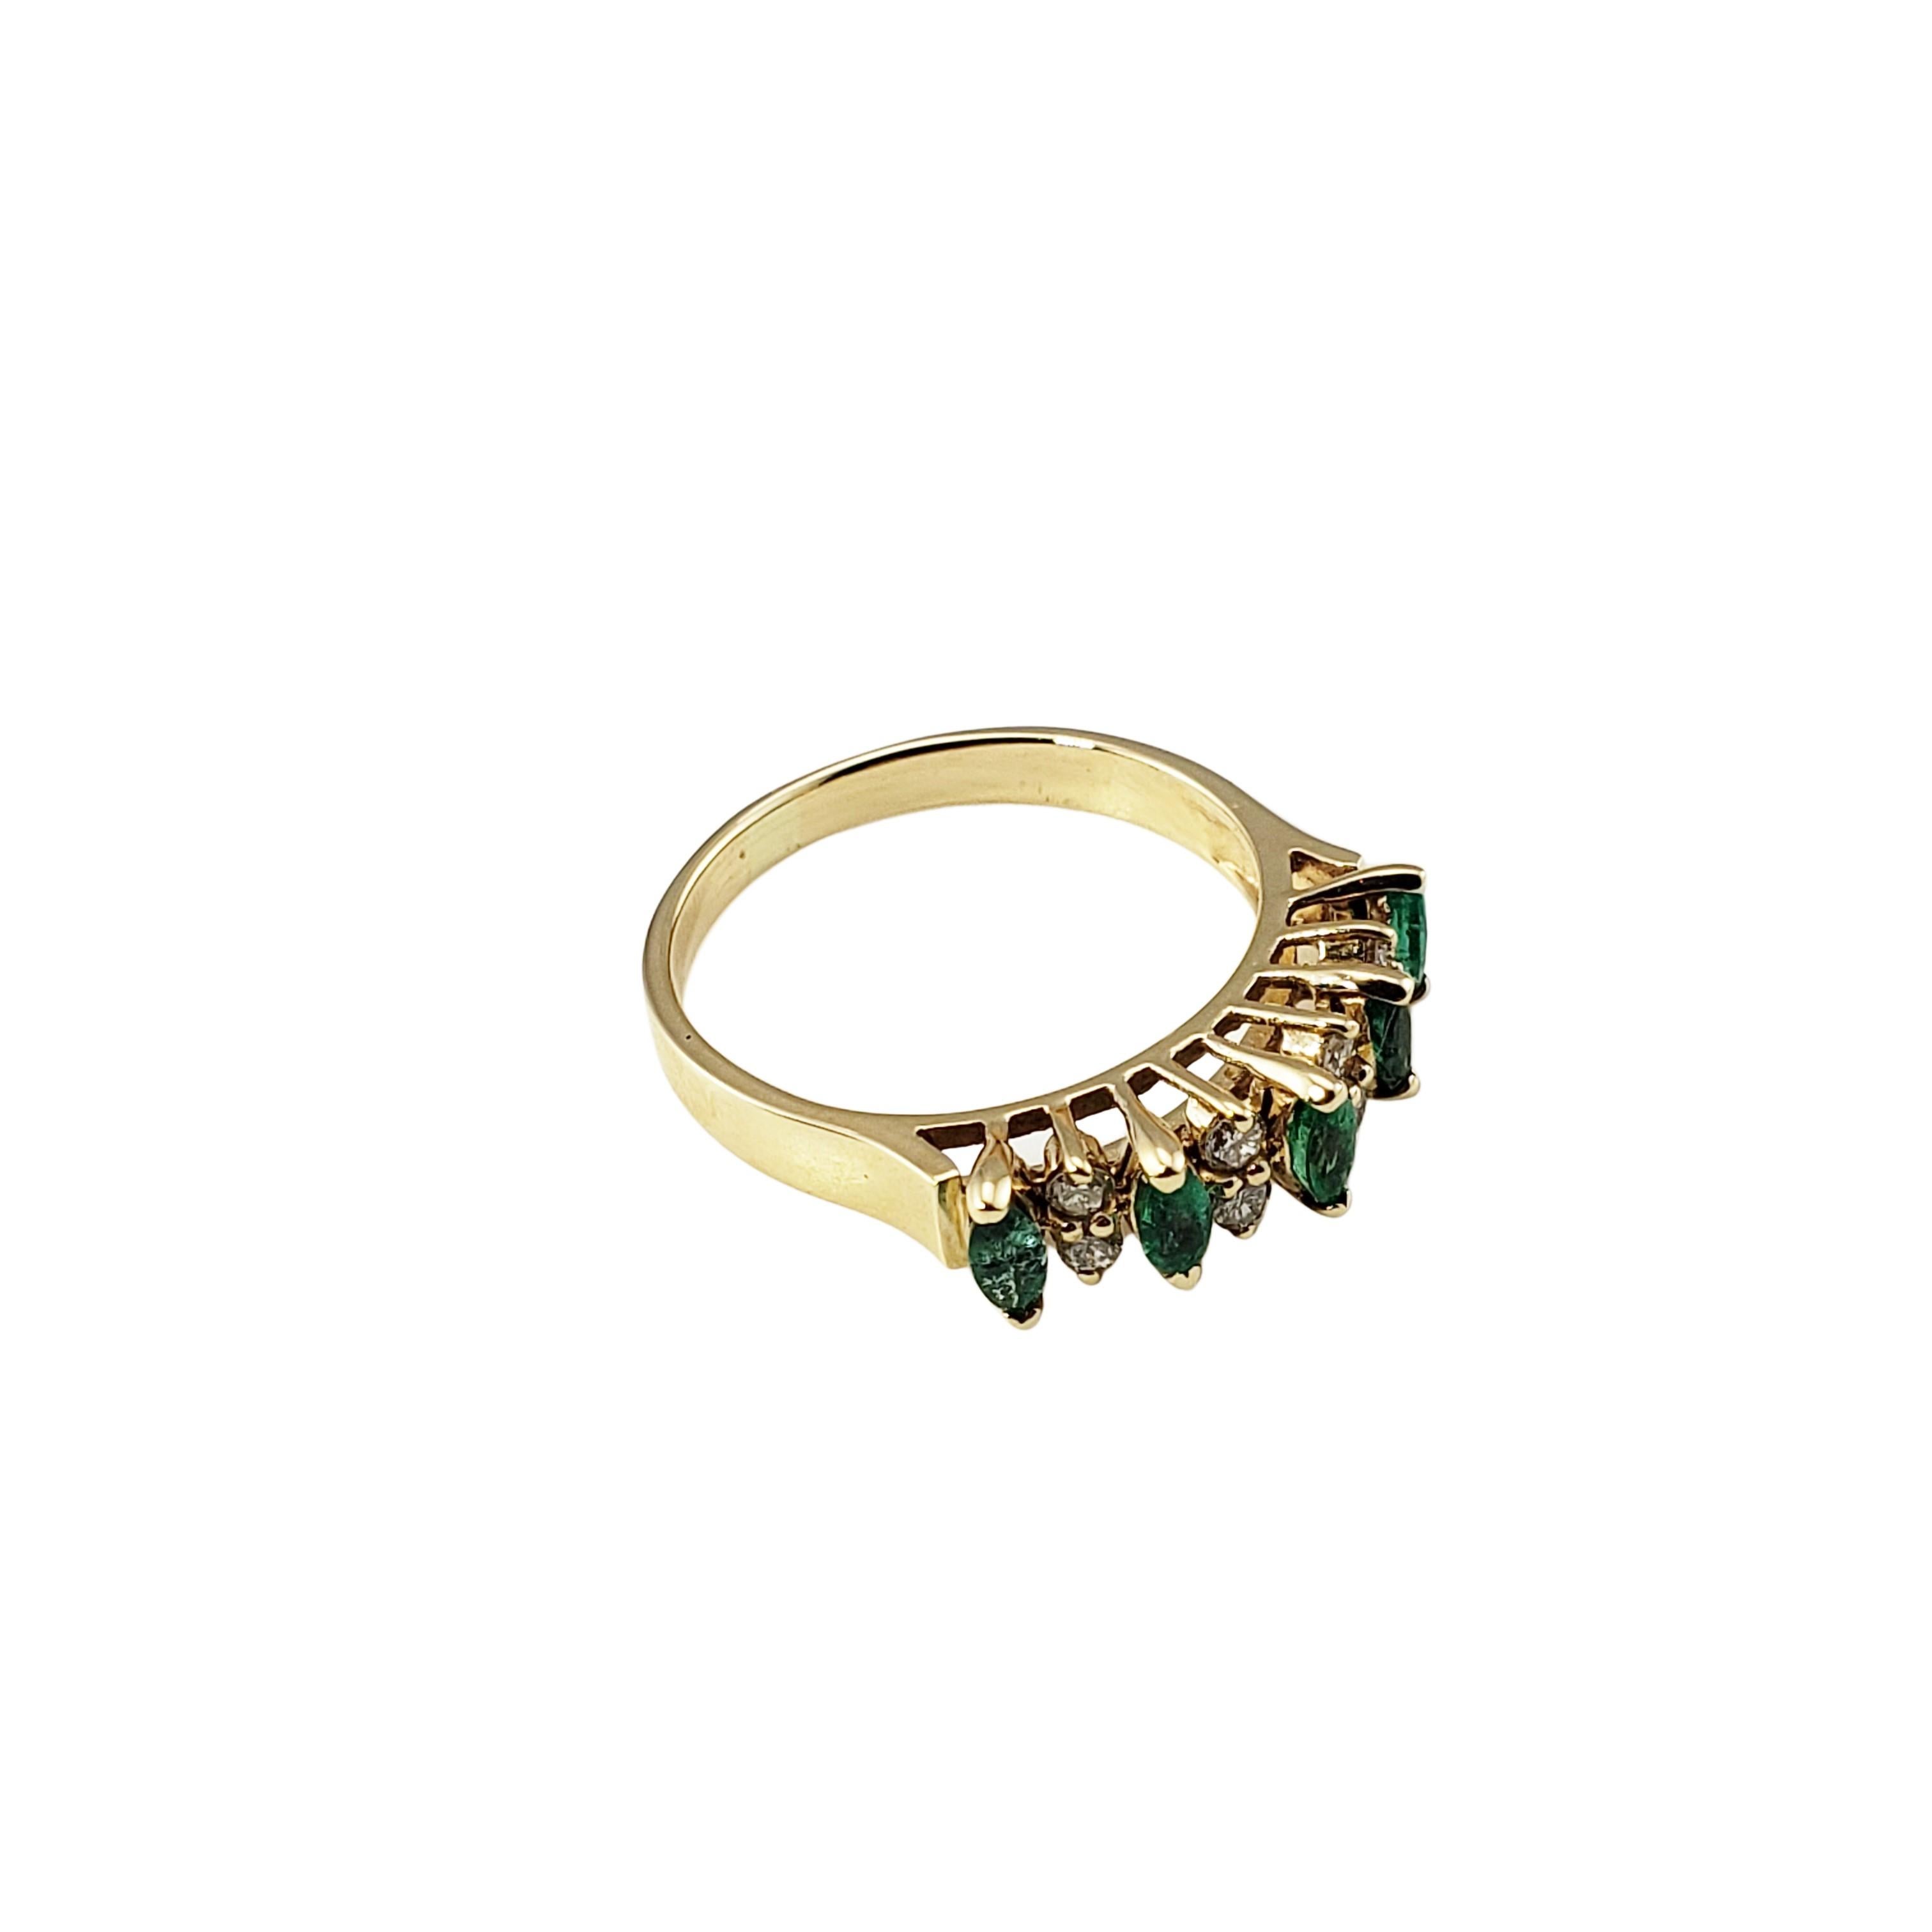 Brilliant Cut Vintage 14 Karat Yellow Gold Emerald and Diamond Ring